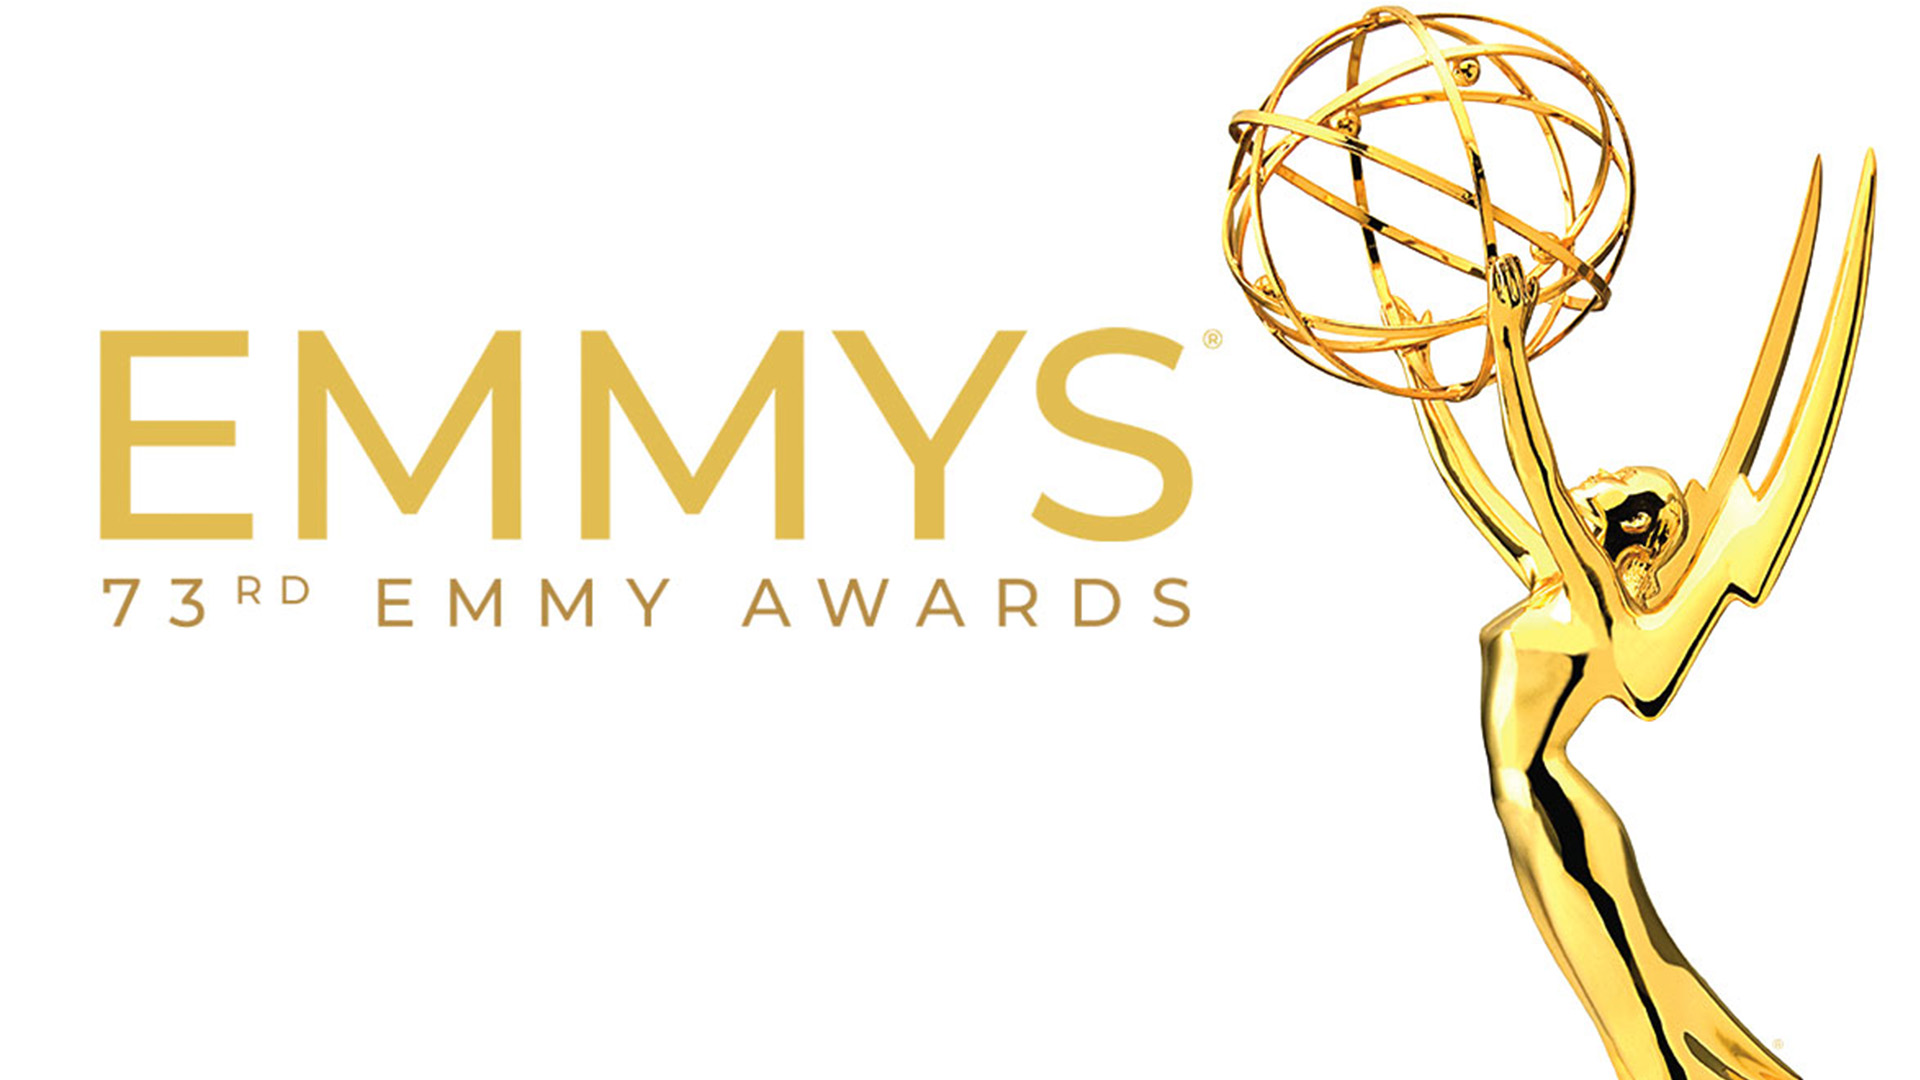 Highlights Emmy Award 2021 Nominations News UpNOW Arts, Community